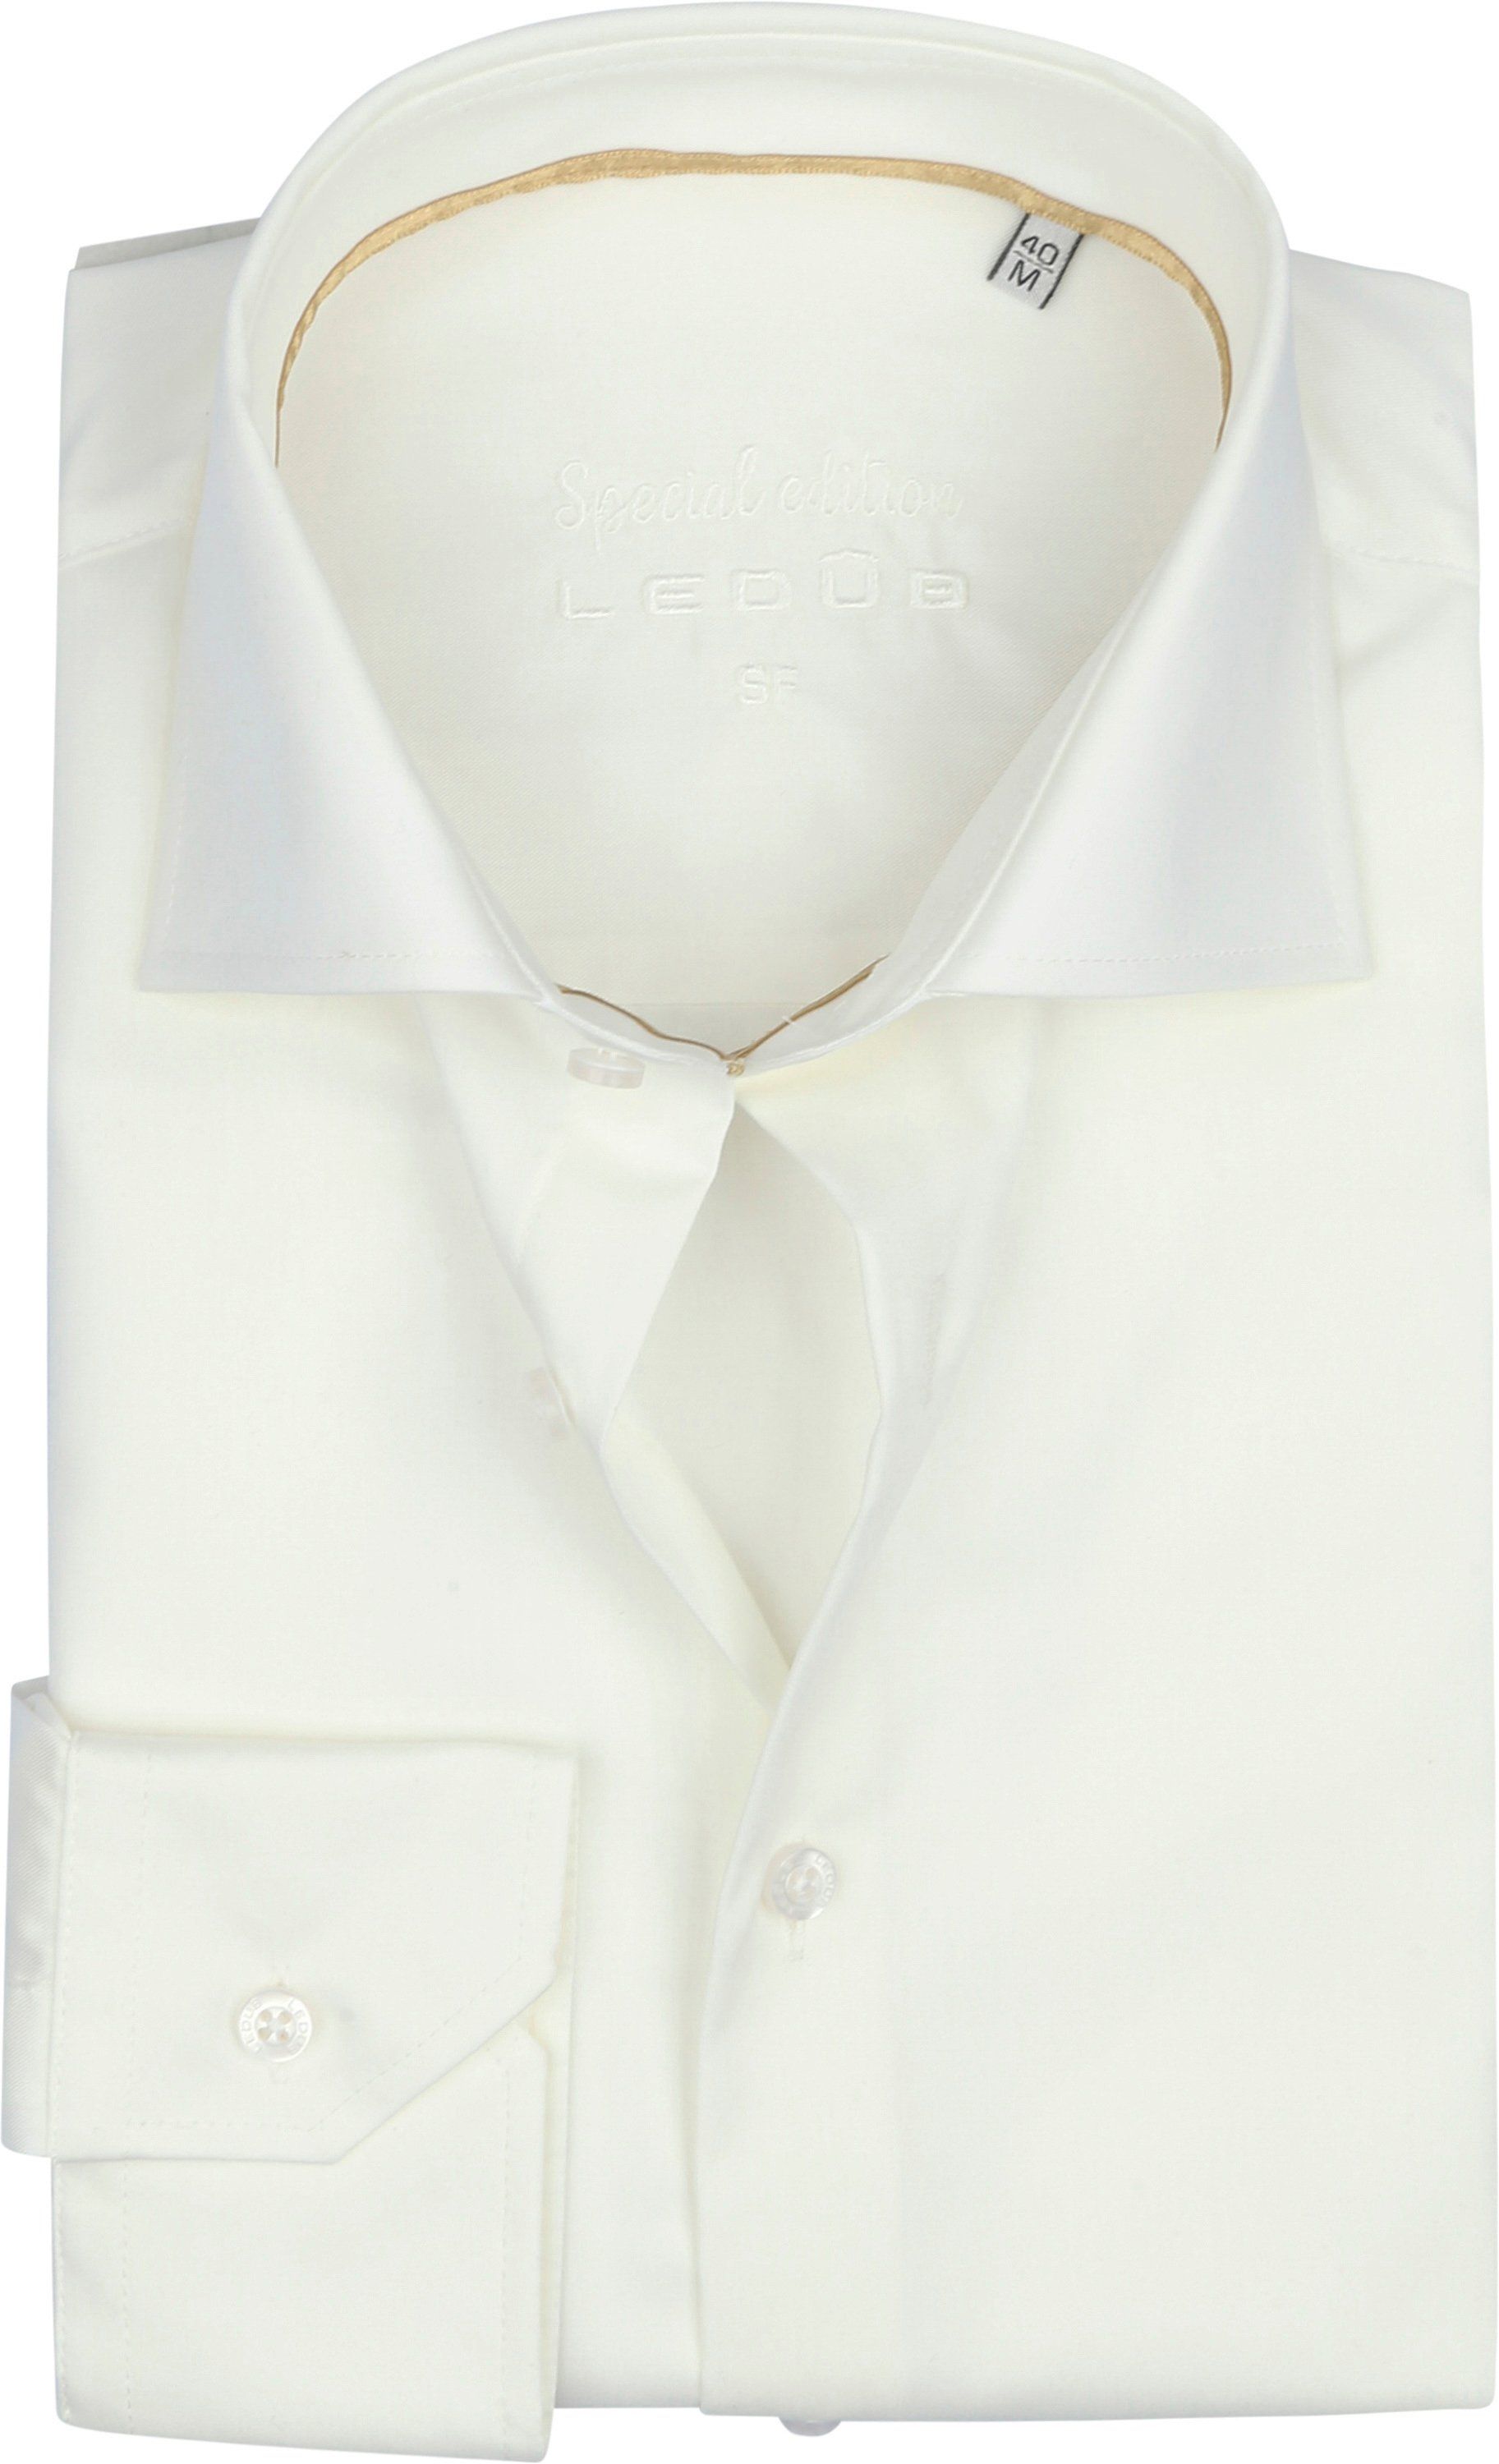 Ledub Shirt Off White Off-White size 14